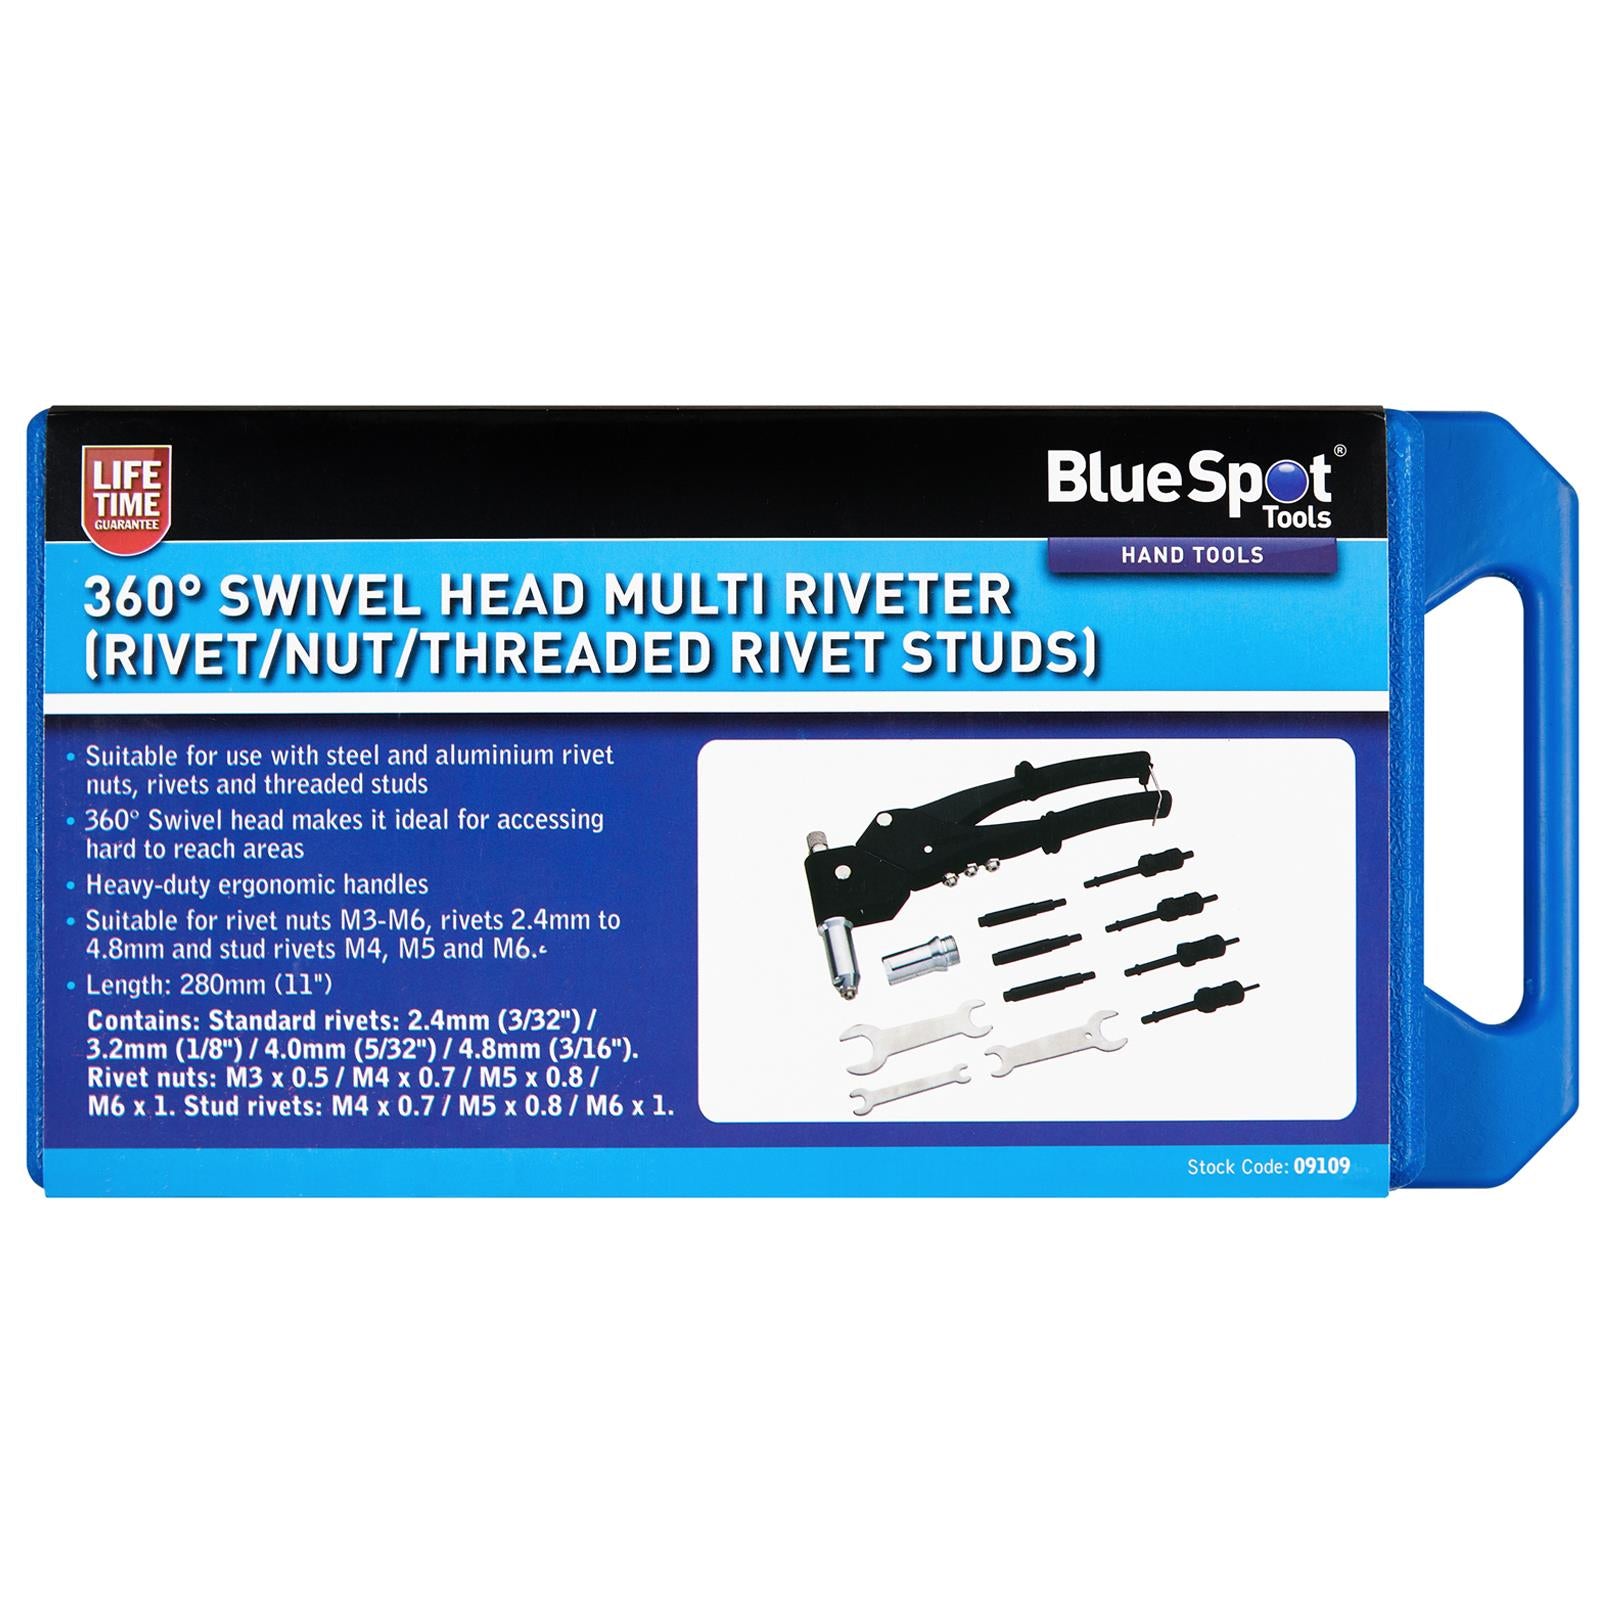 BlueSpot Multi Riveter 360° Swivel Head Rivet Gun for Rivet Nuts Rivets and Stud Rivets